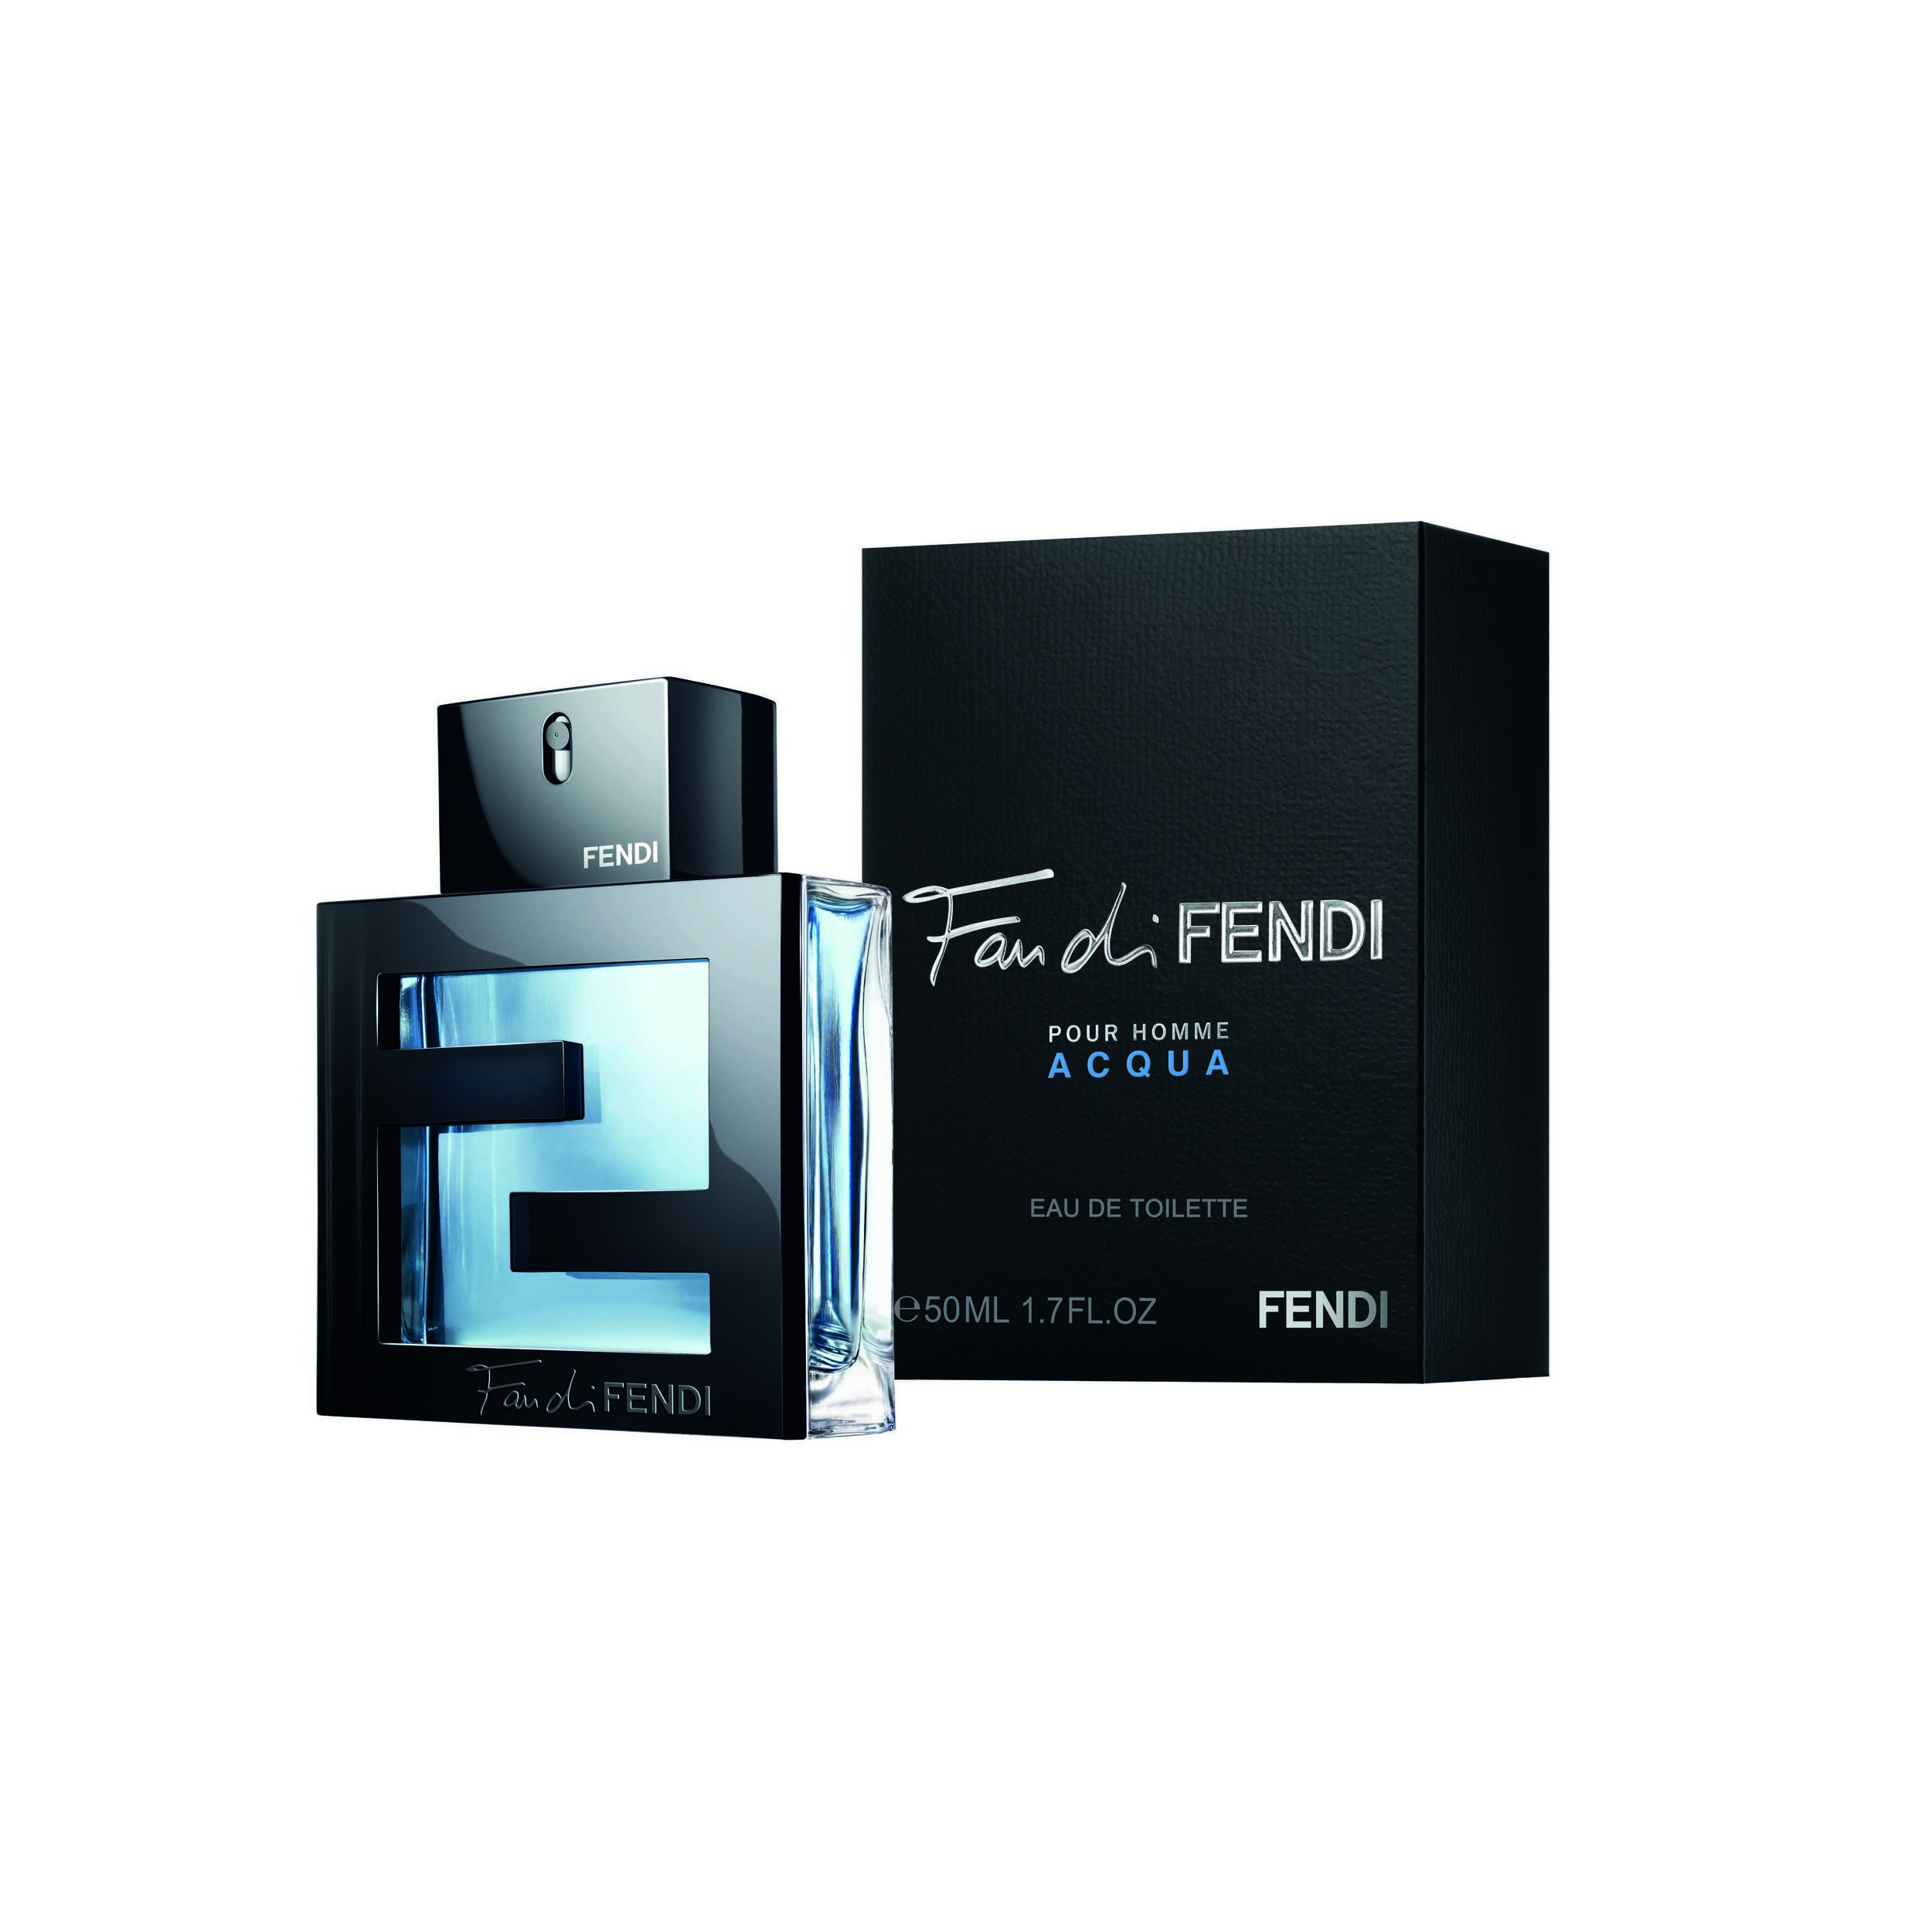 Fan di FENDI Pour Homme Acqua & Outerbox 50ml.jpg